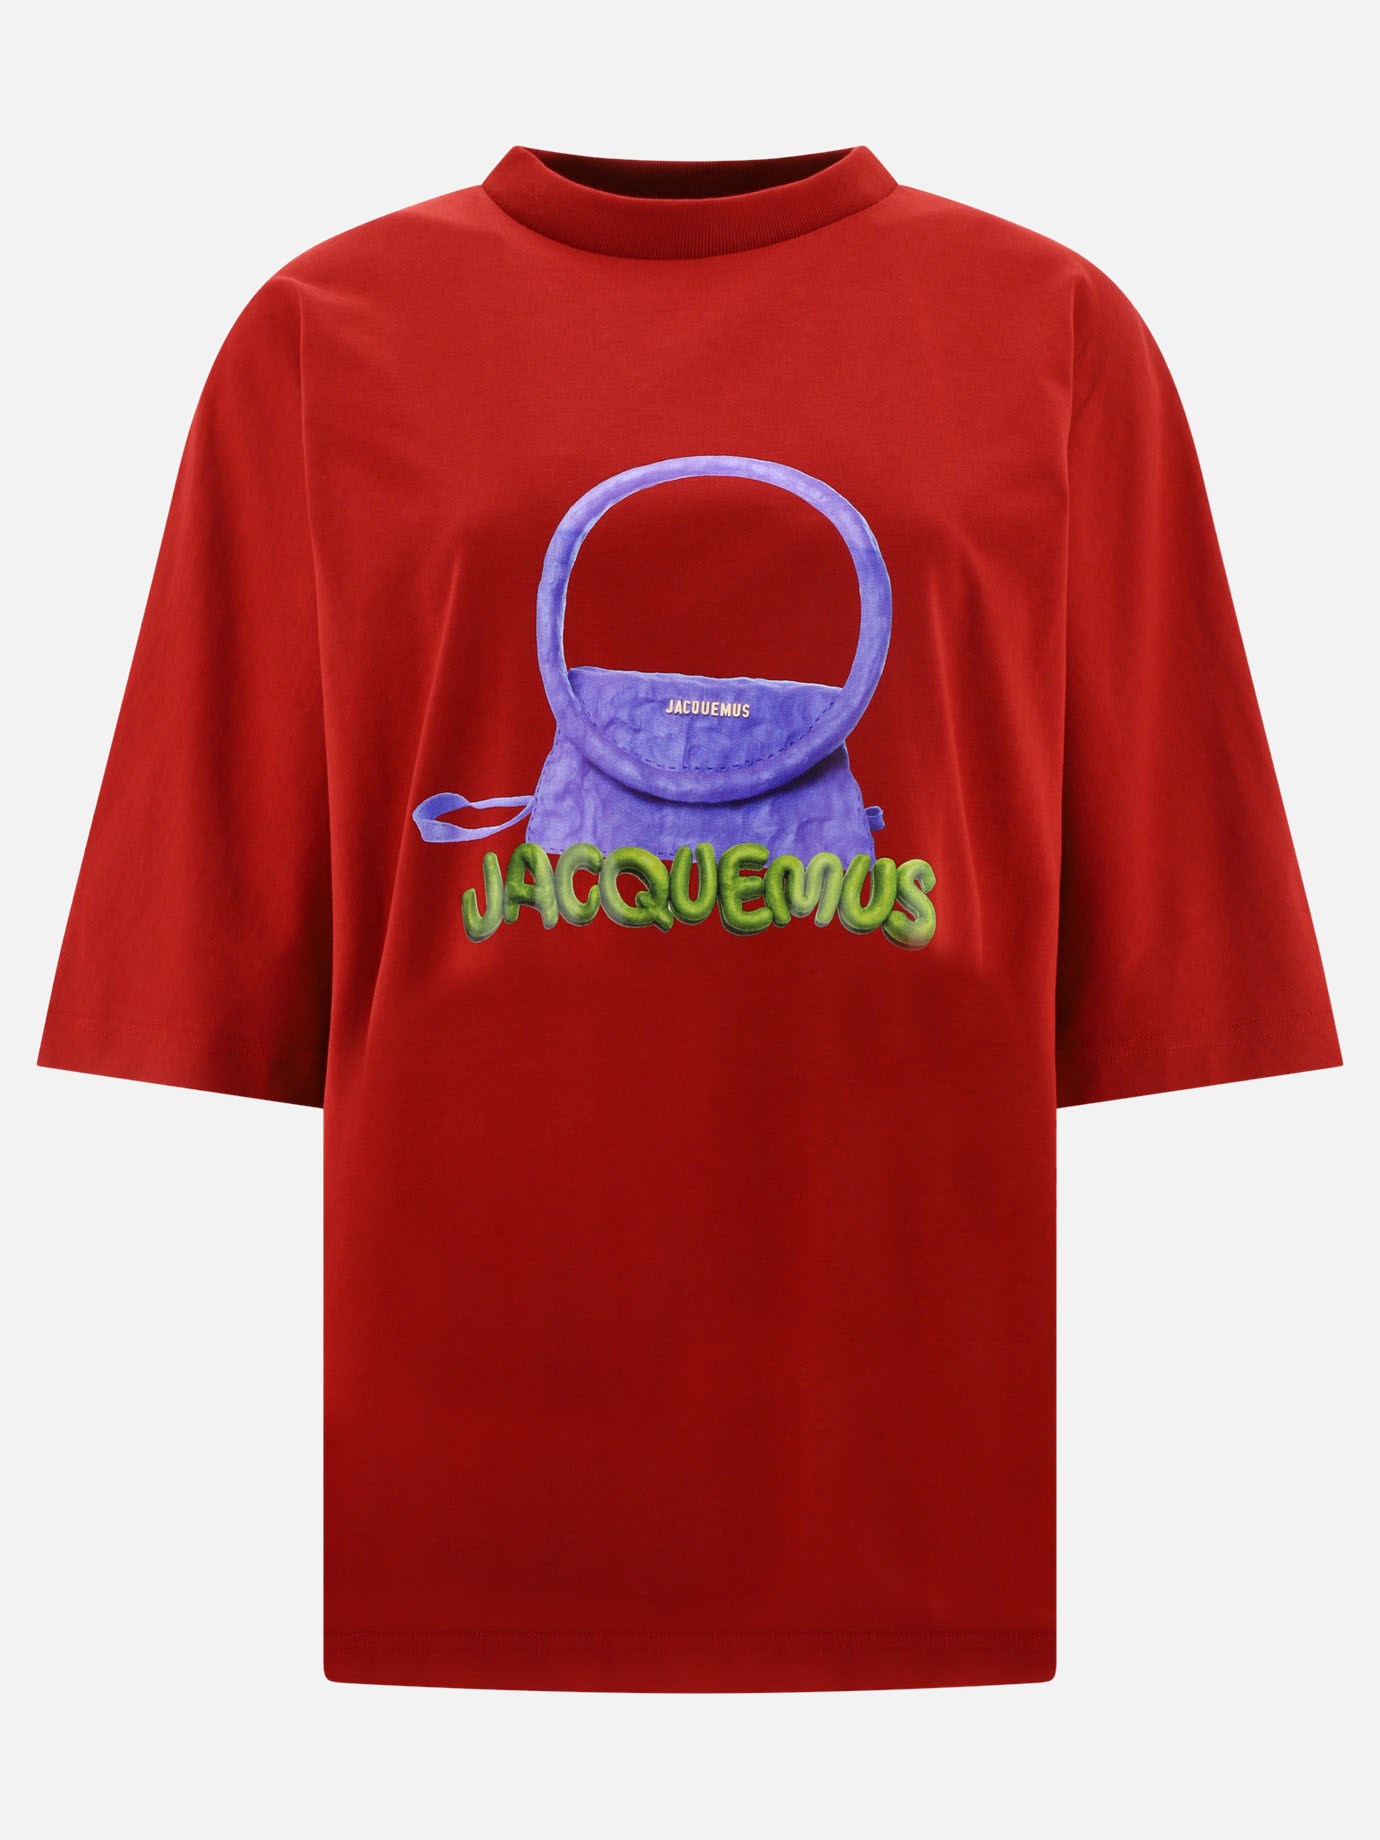 T-shirt  Le T-shirt Sac Rond by Jacquemus - 2